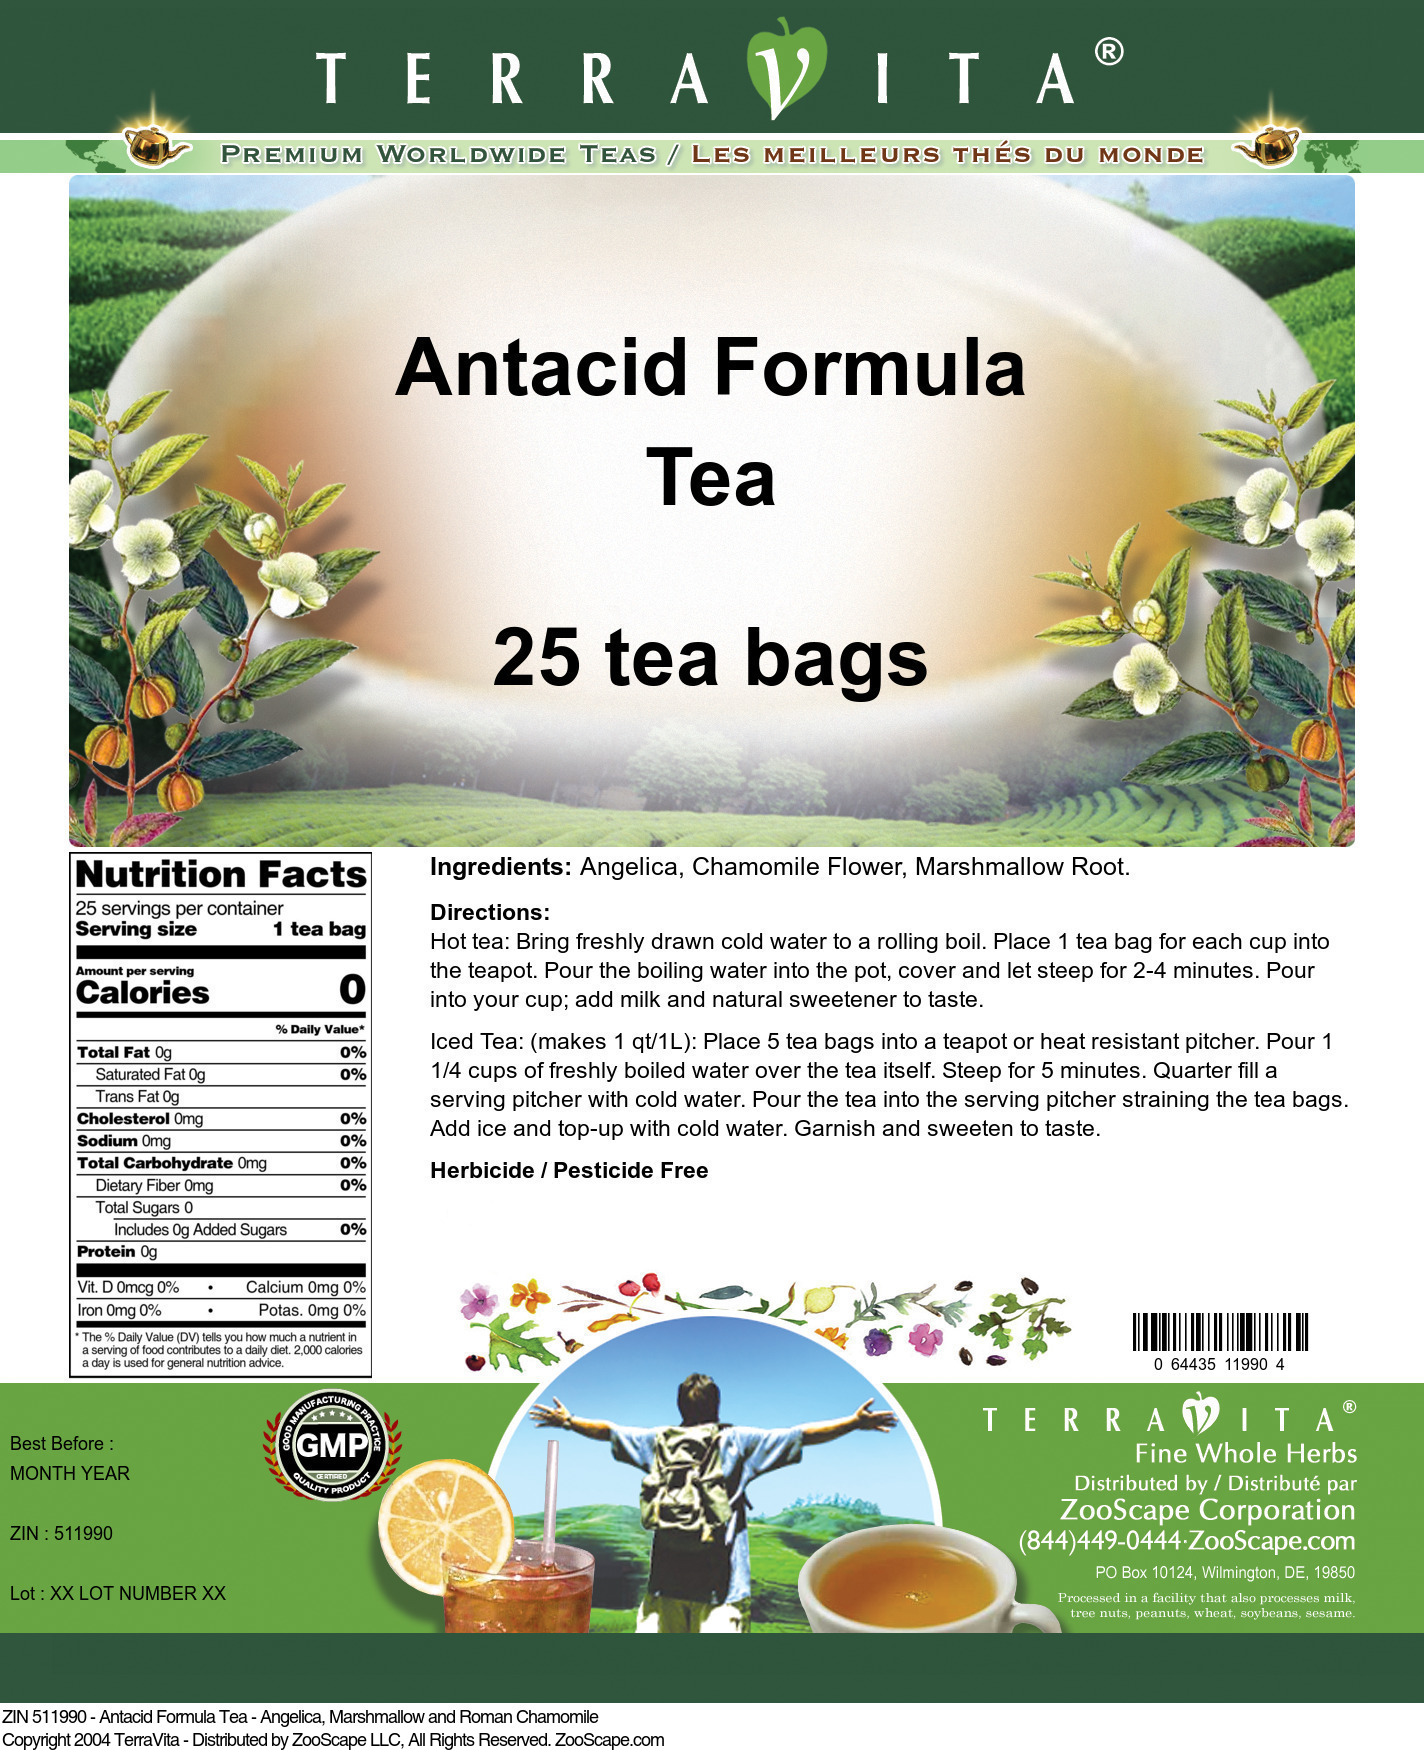 Antacid Formula Tea - Angelica, Marshmallow and Roman Chamomile - Label